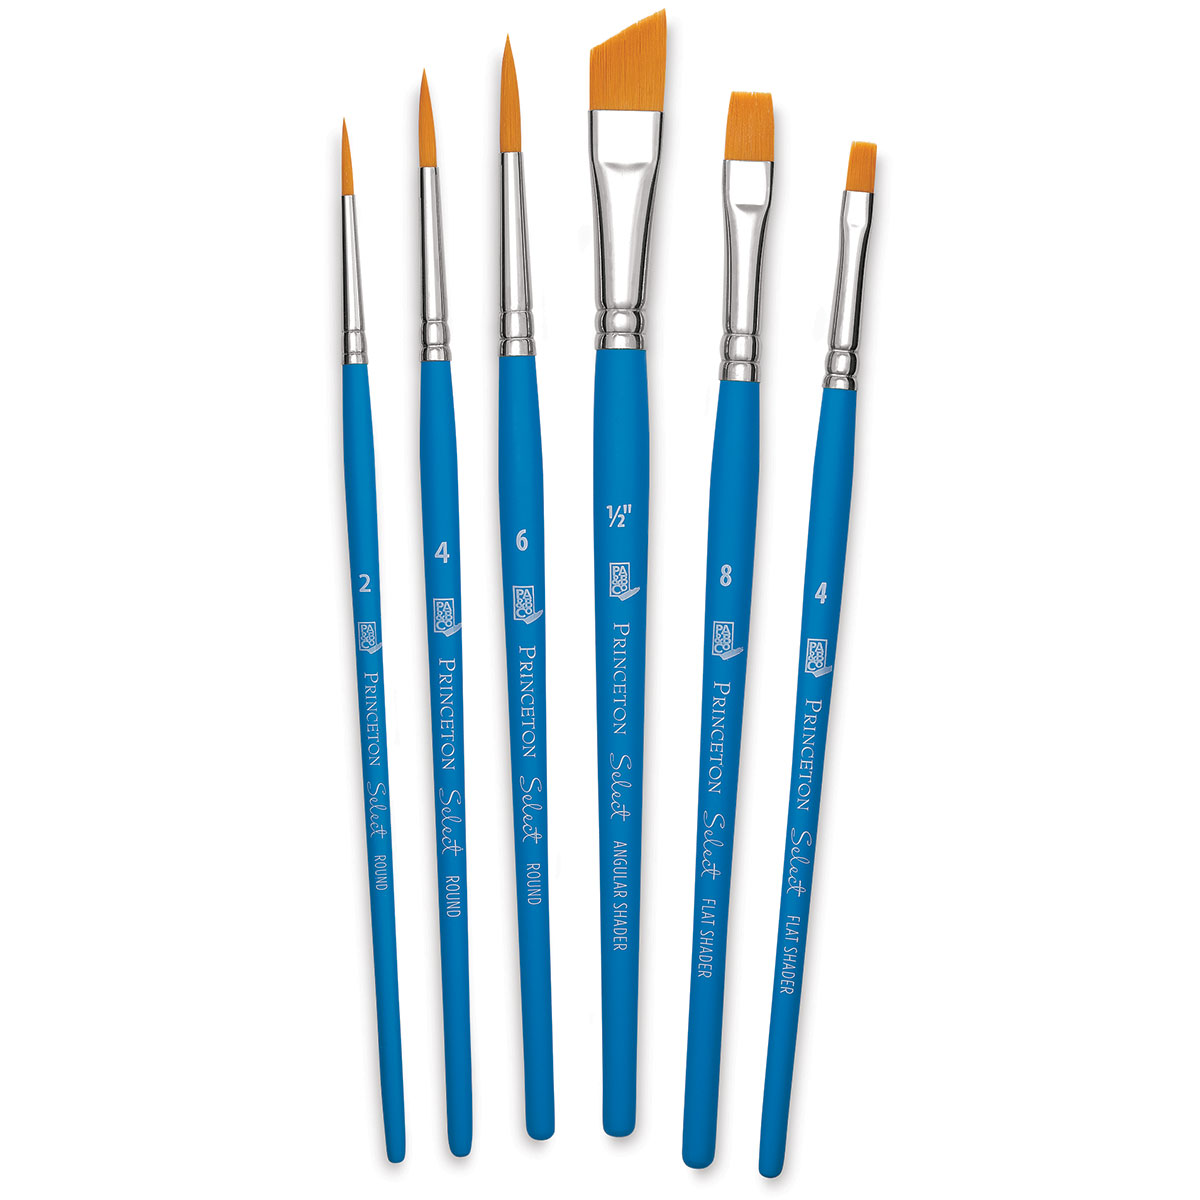 Princeton Select Series 3750 Brush Sets